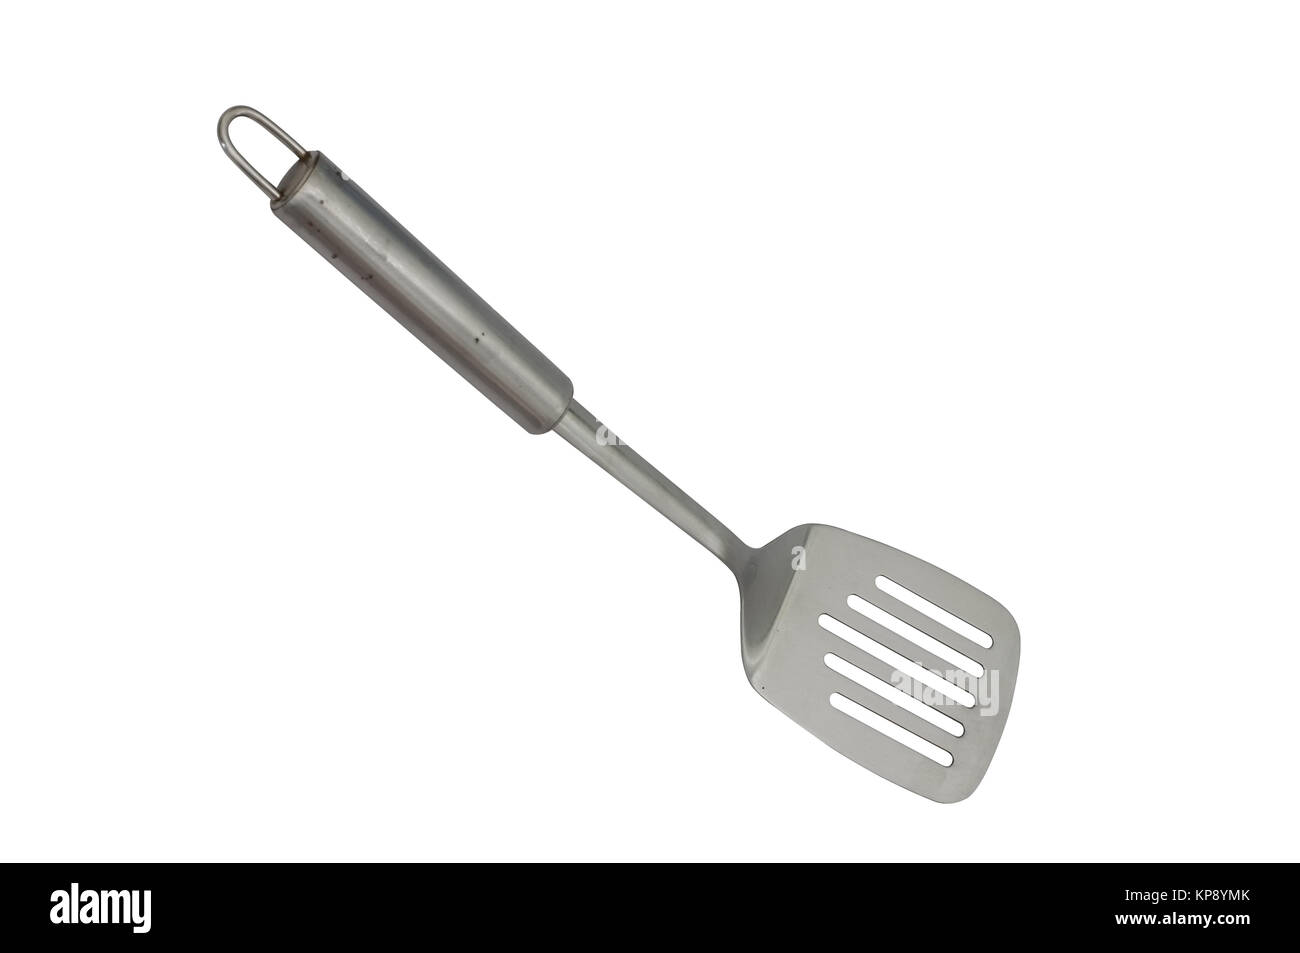 https://c8.alamy.com/comp/KP8YMK/stainless-steel-spade-of-frying-pan-flipper-kitchenware-isolated-on-KP8YMK.jpg